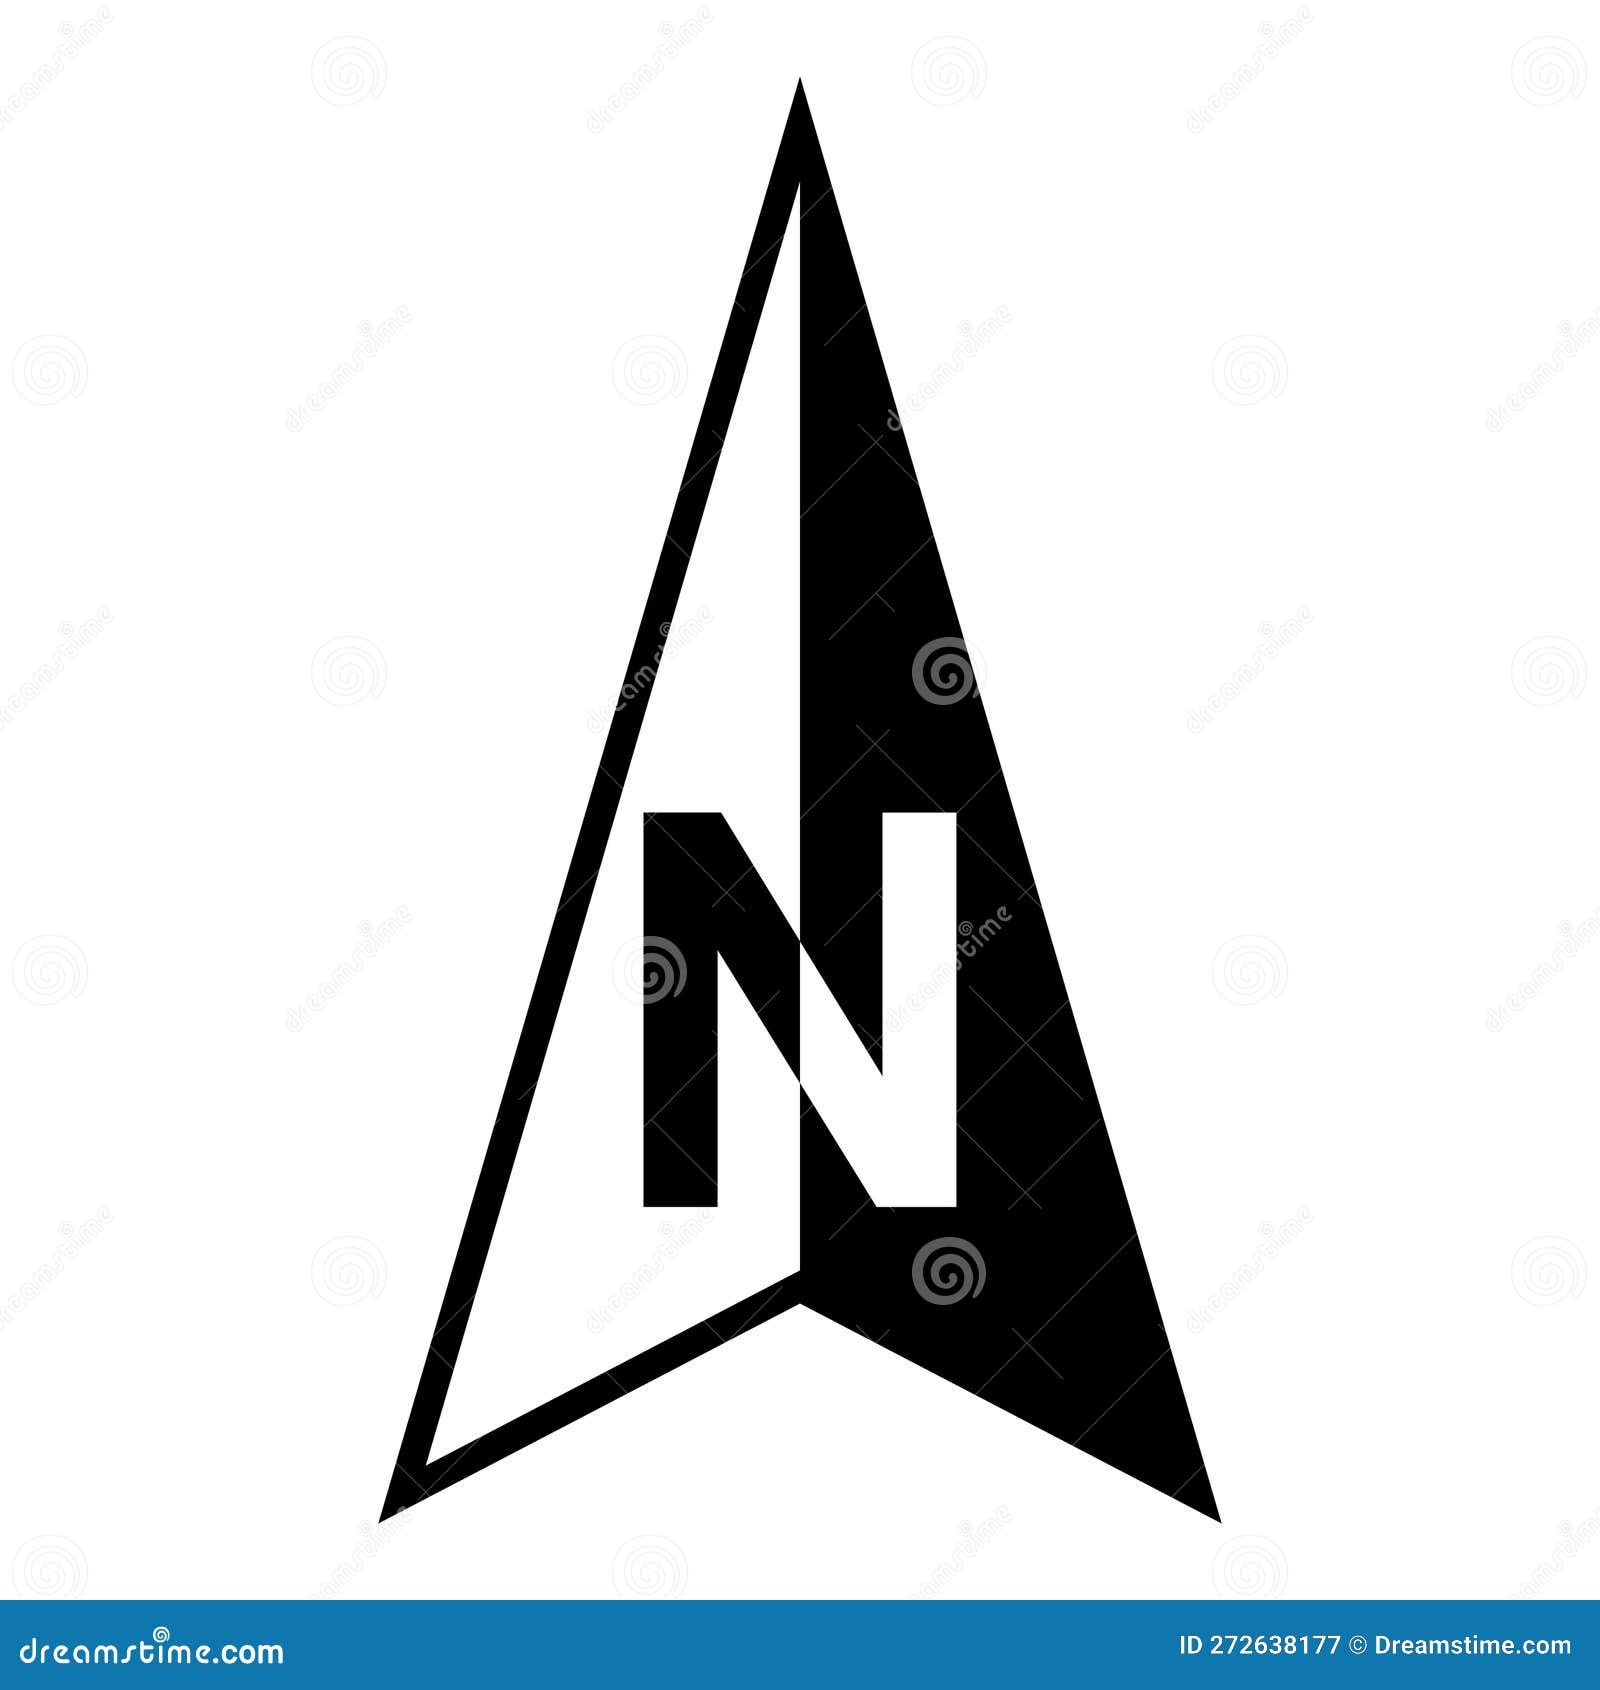 n north compass, map icon arrow, north logo direction orientation